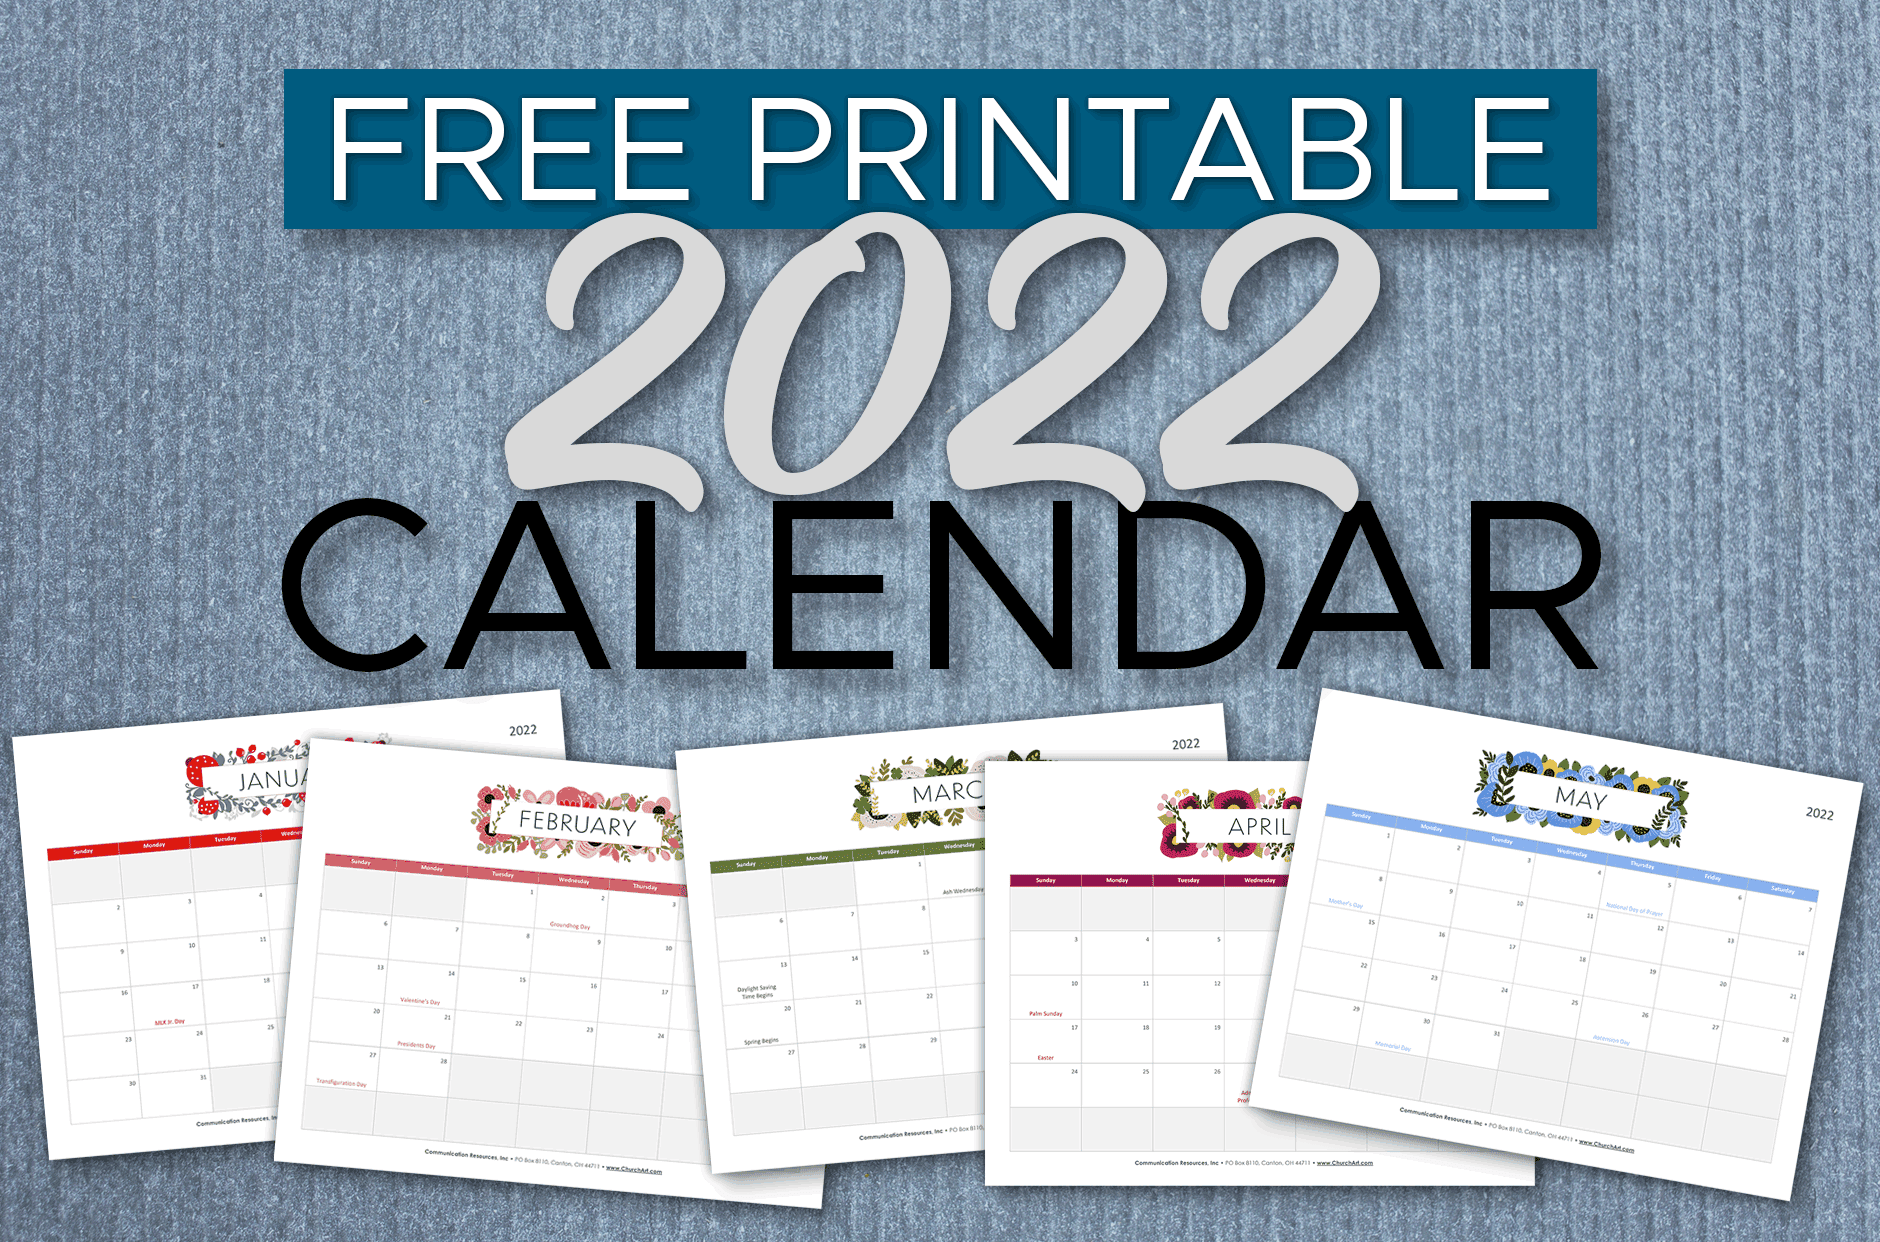 Free Blank Calendar 2022 Free Printable 2022 Church Calendar | Churchart.com Blog